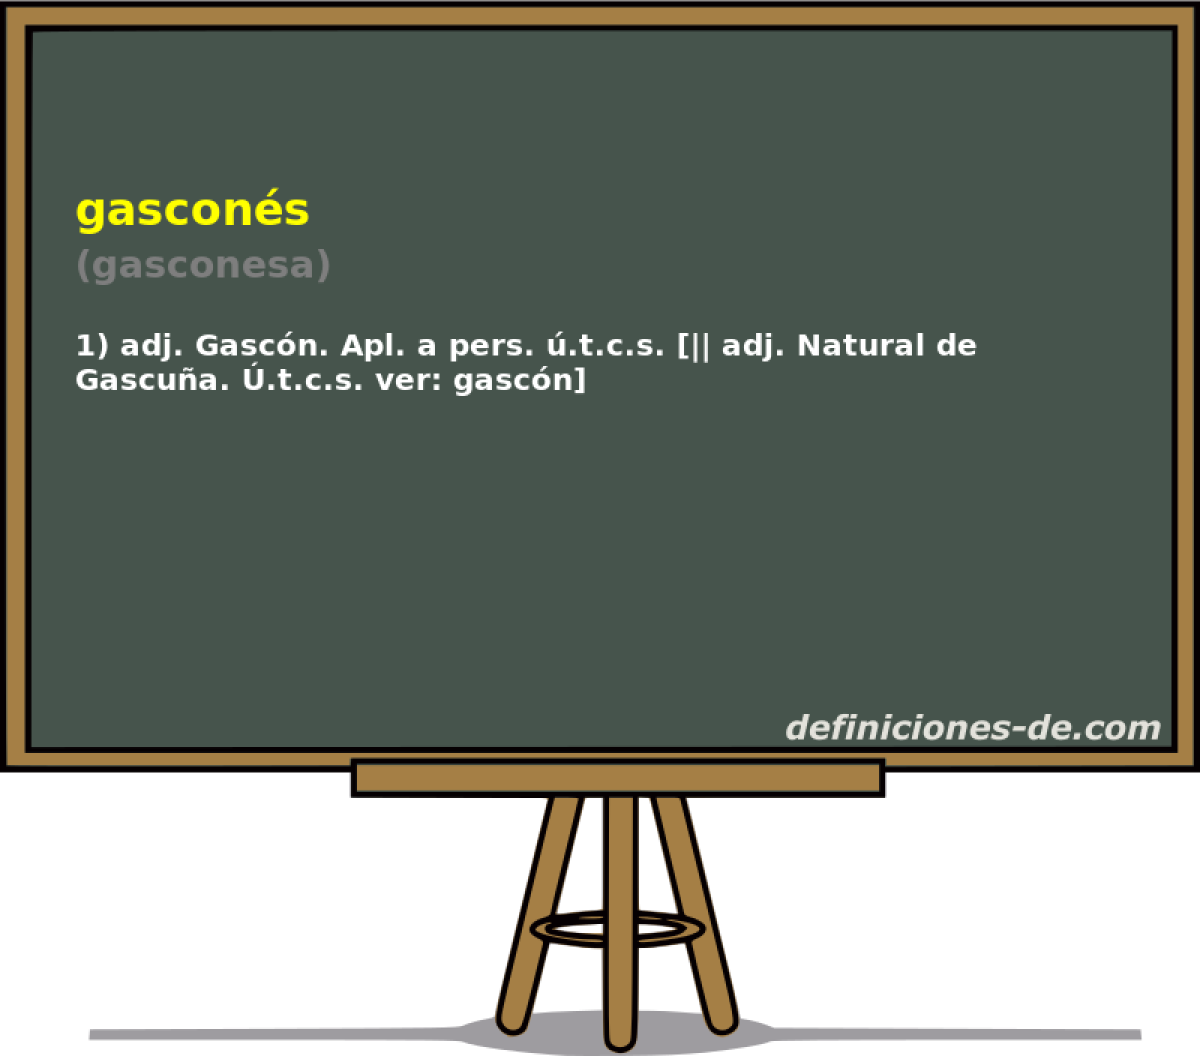 gascons (gasconesa)